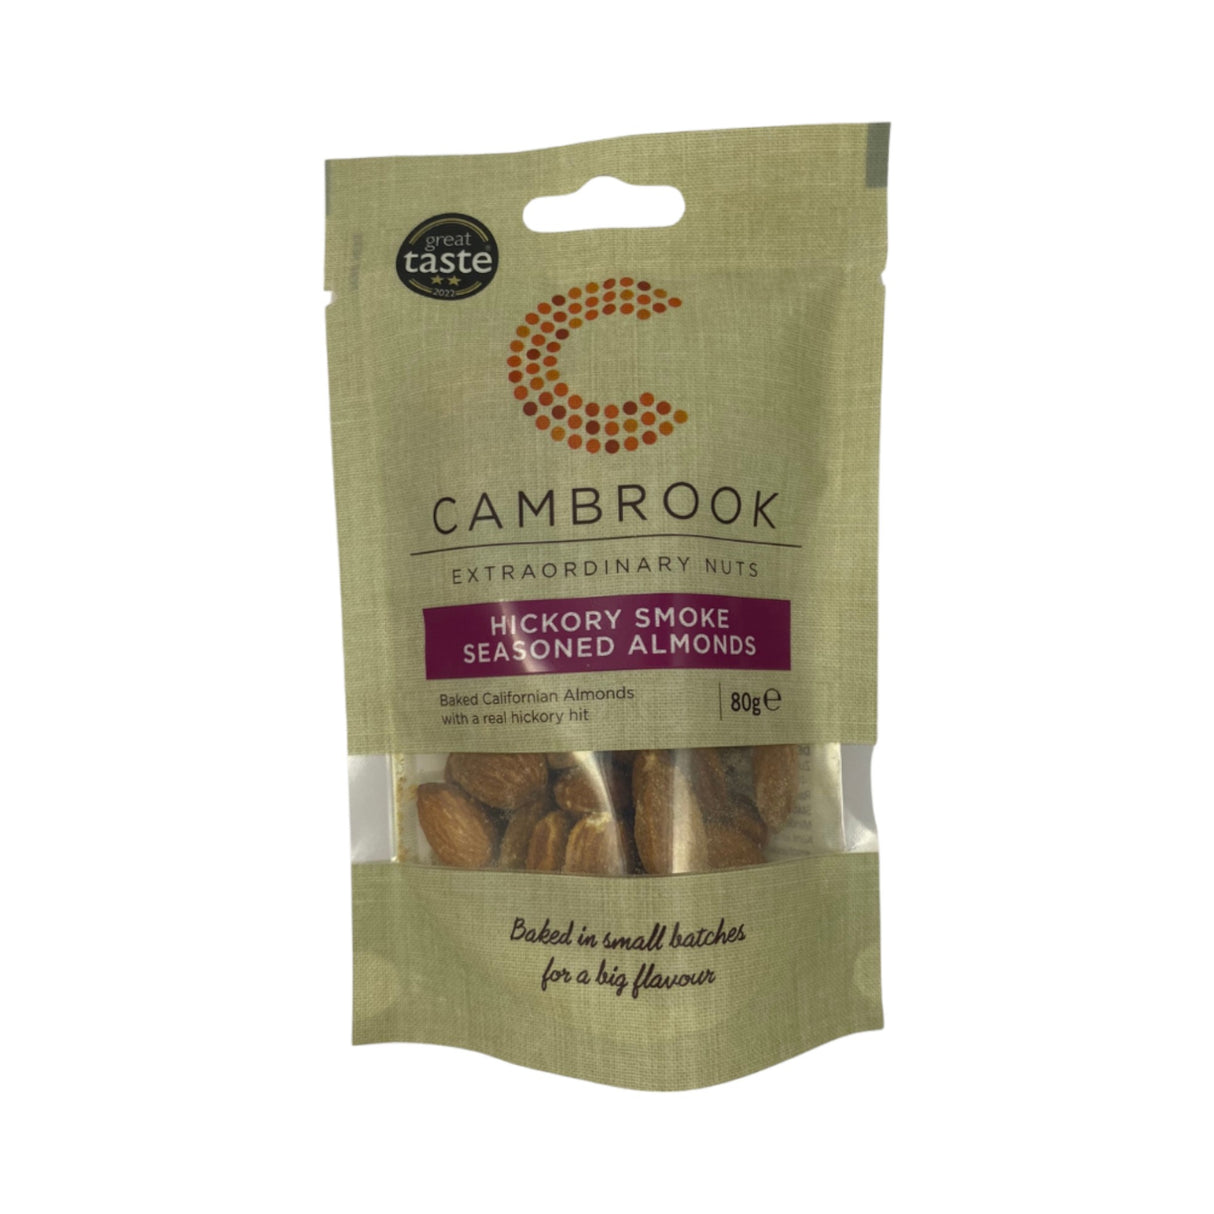 Cambrook - Hickory Smoke Seasoned Almonds 80g